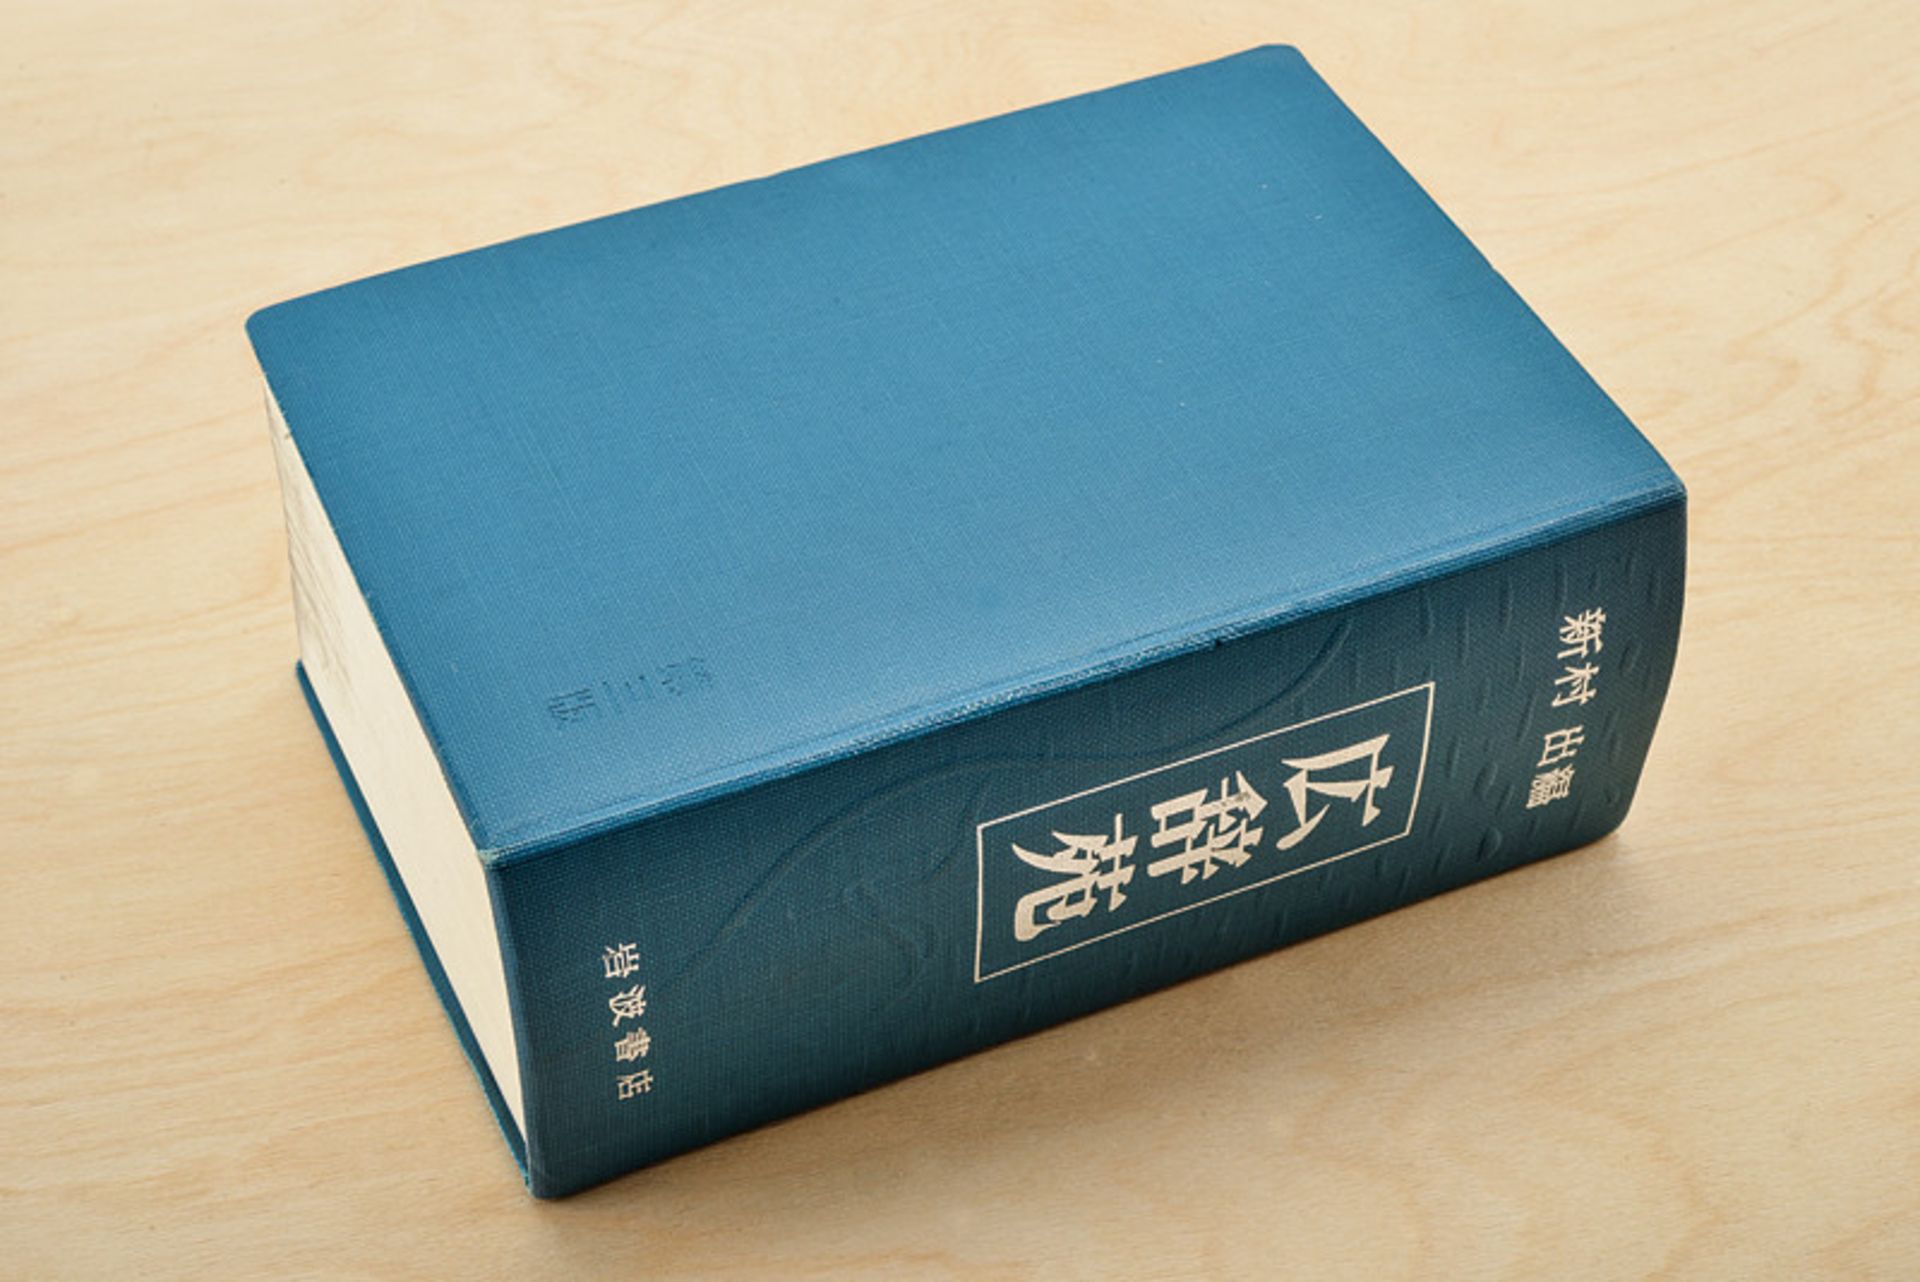 Shinmura, Izuru dating: 20th Century provenance: Japan "Kojien" (Dictionary of ancient japanese